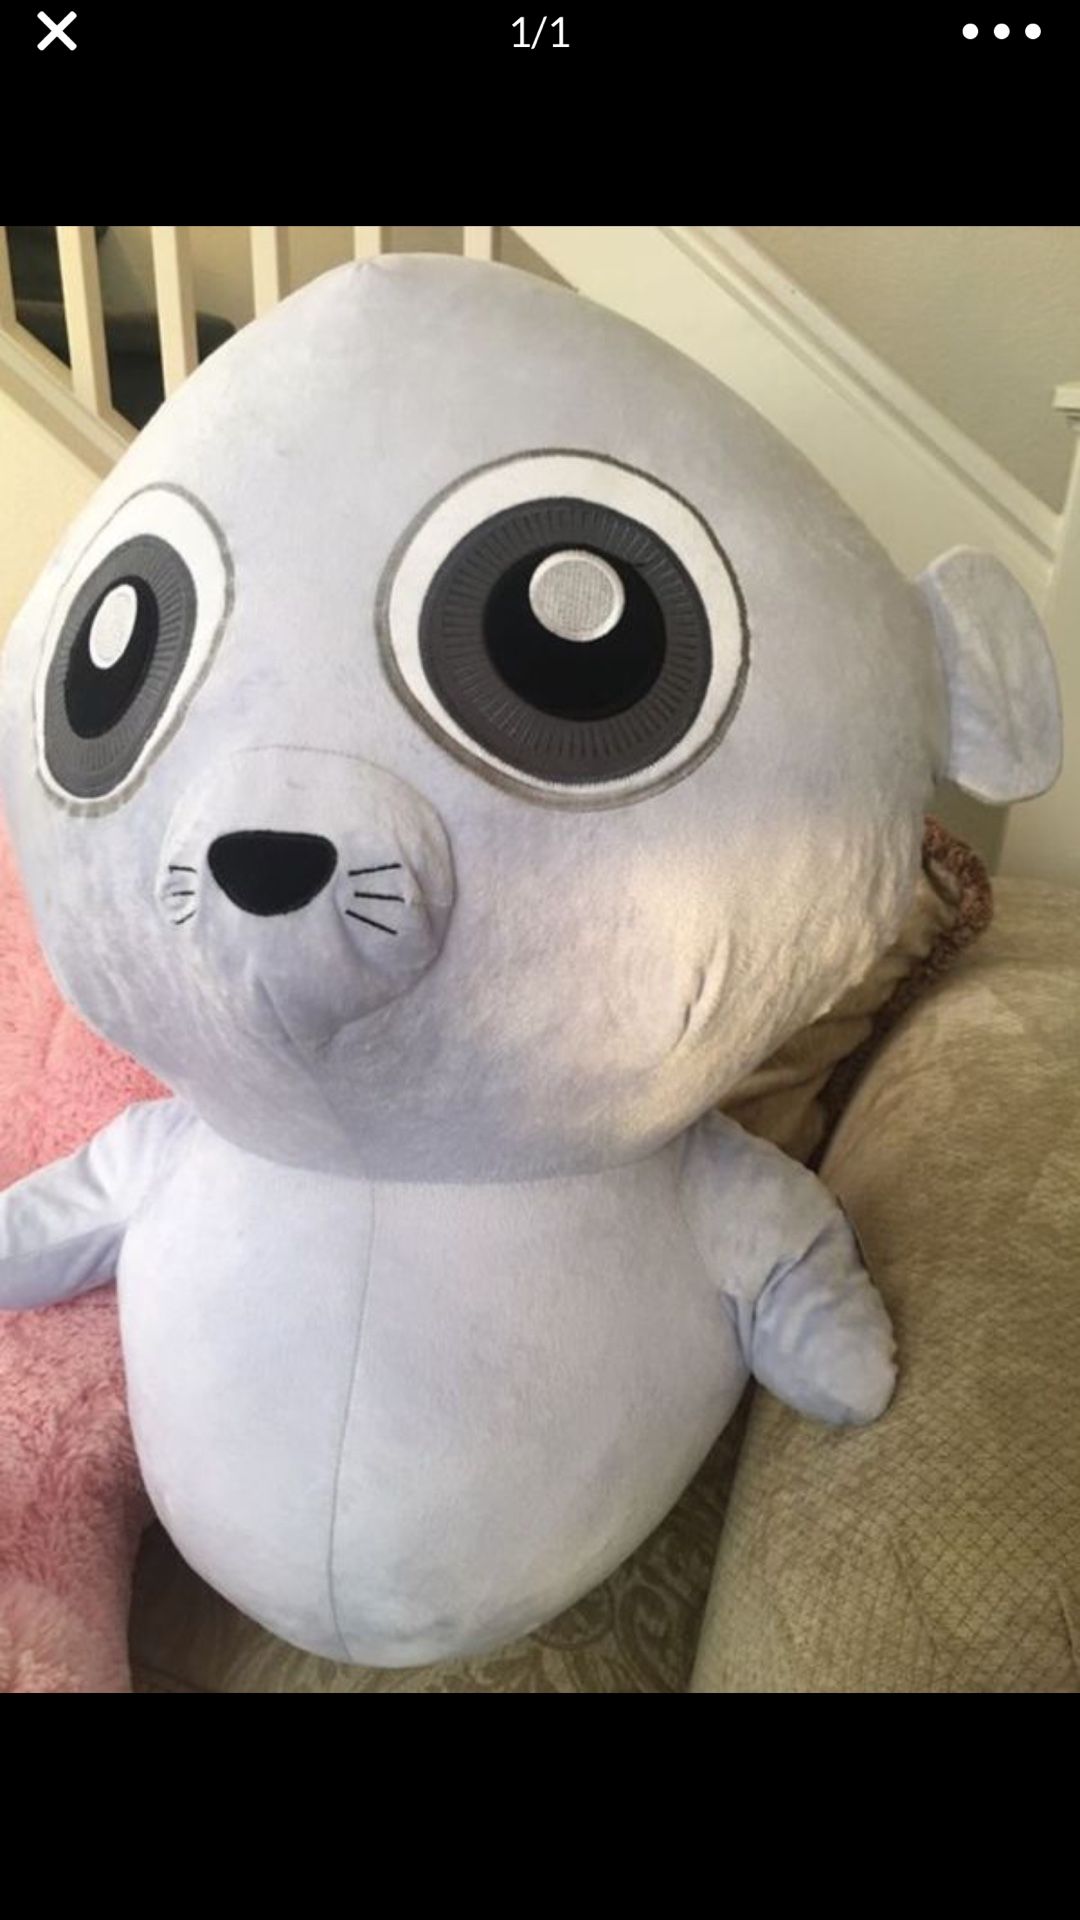 Cute seal stuffed animal - large size!